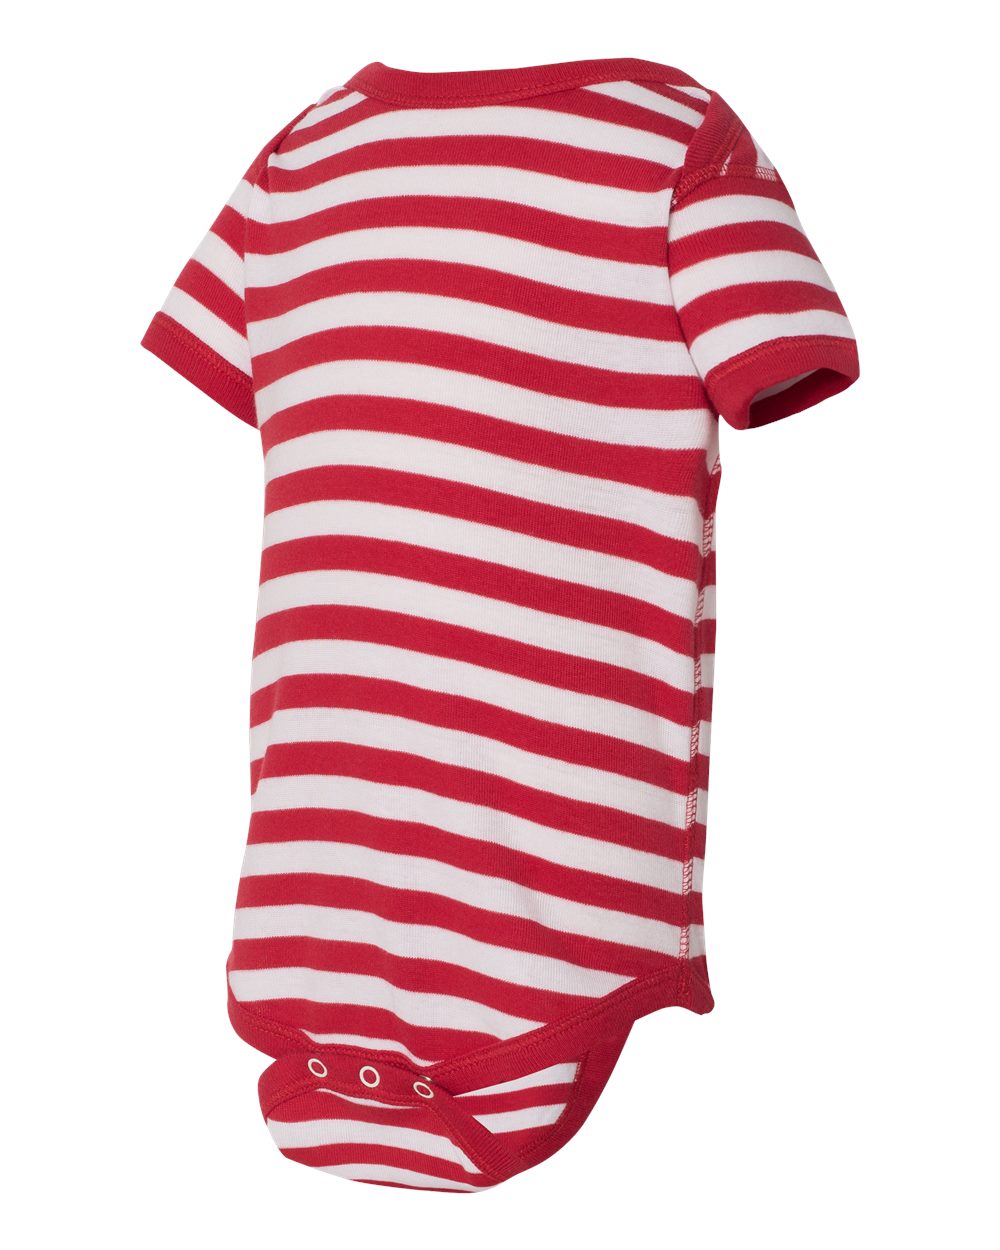 Rabbit Skin Baby Bodysuit 4400 Red-White Stripe